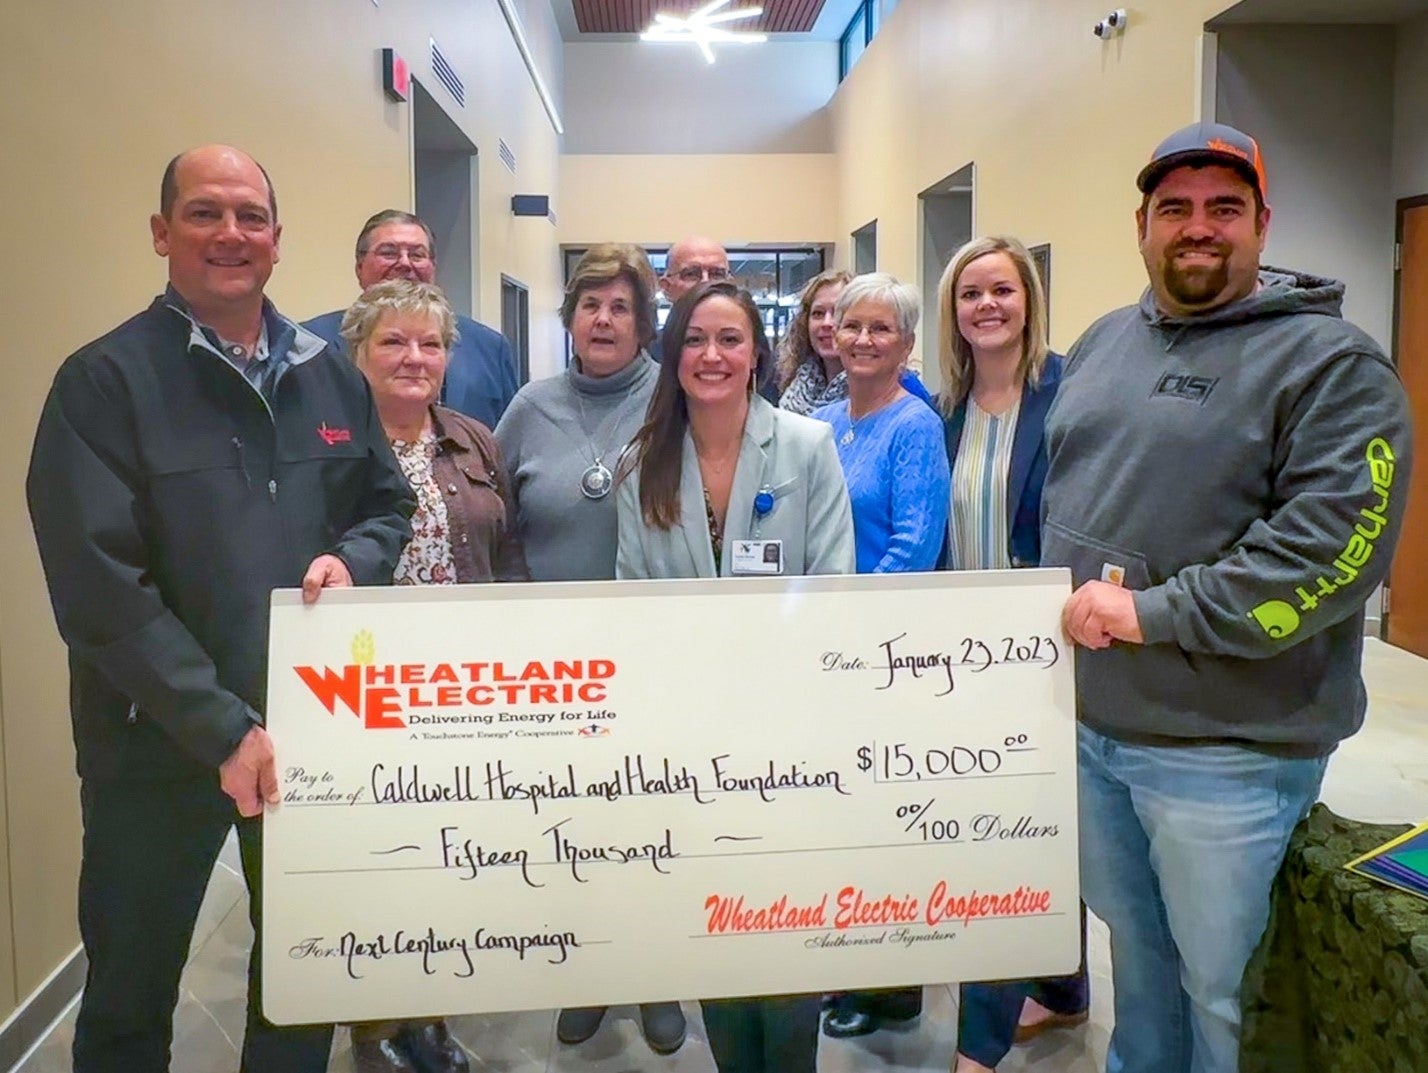 Wheatland pledges $15,000 to Caldwell Area Hospital Health Foundation